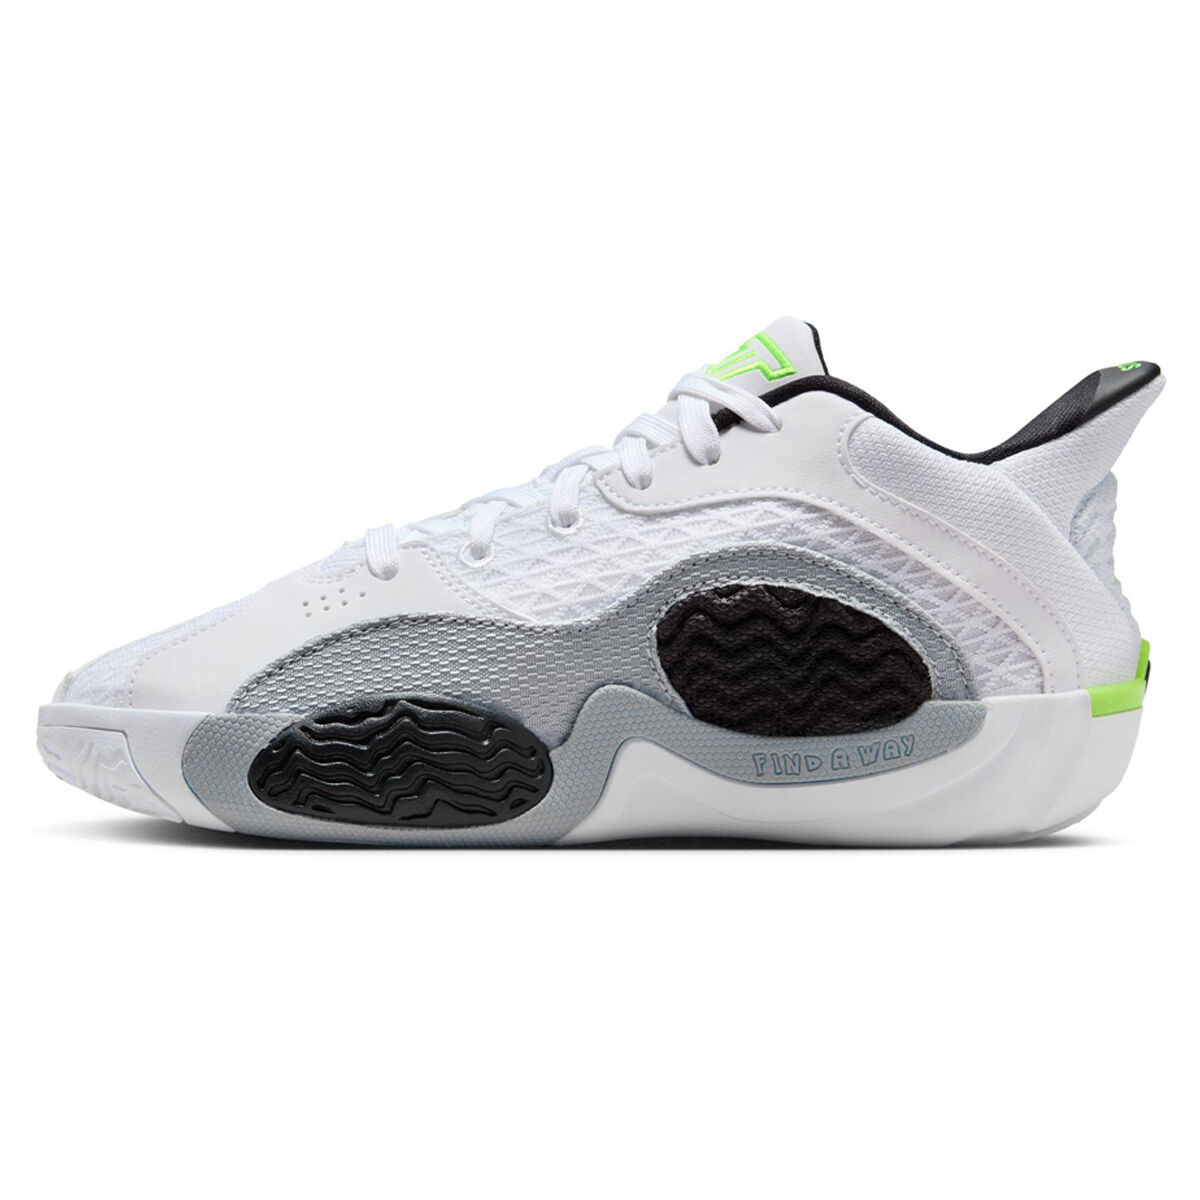 Jordan Tatum 2 GS Kids Basketball Shoes White/Green US 4, White/Green, rebel_hi-res